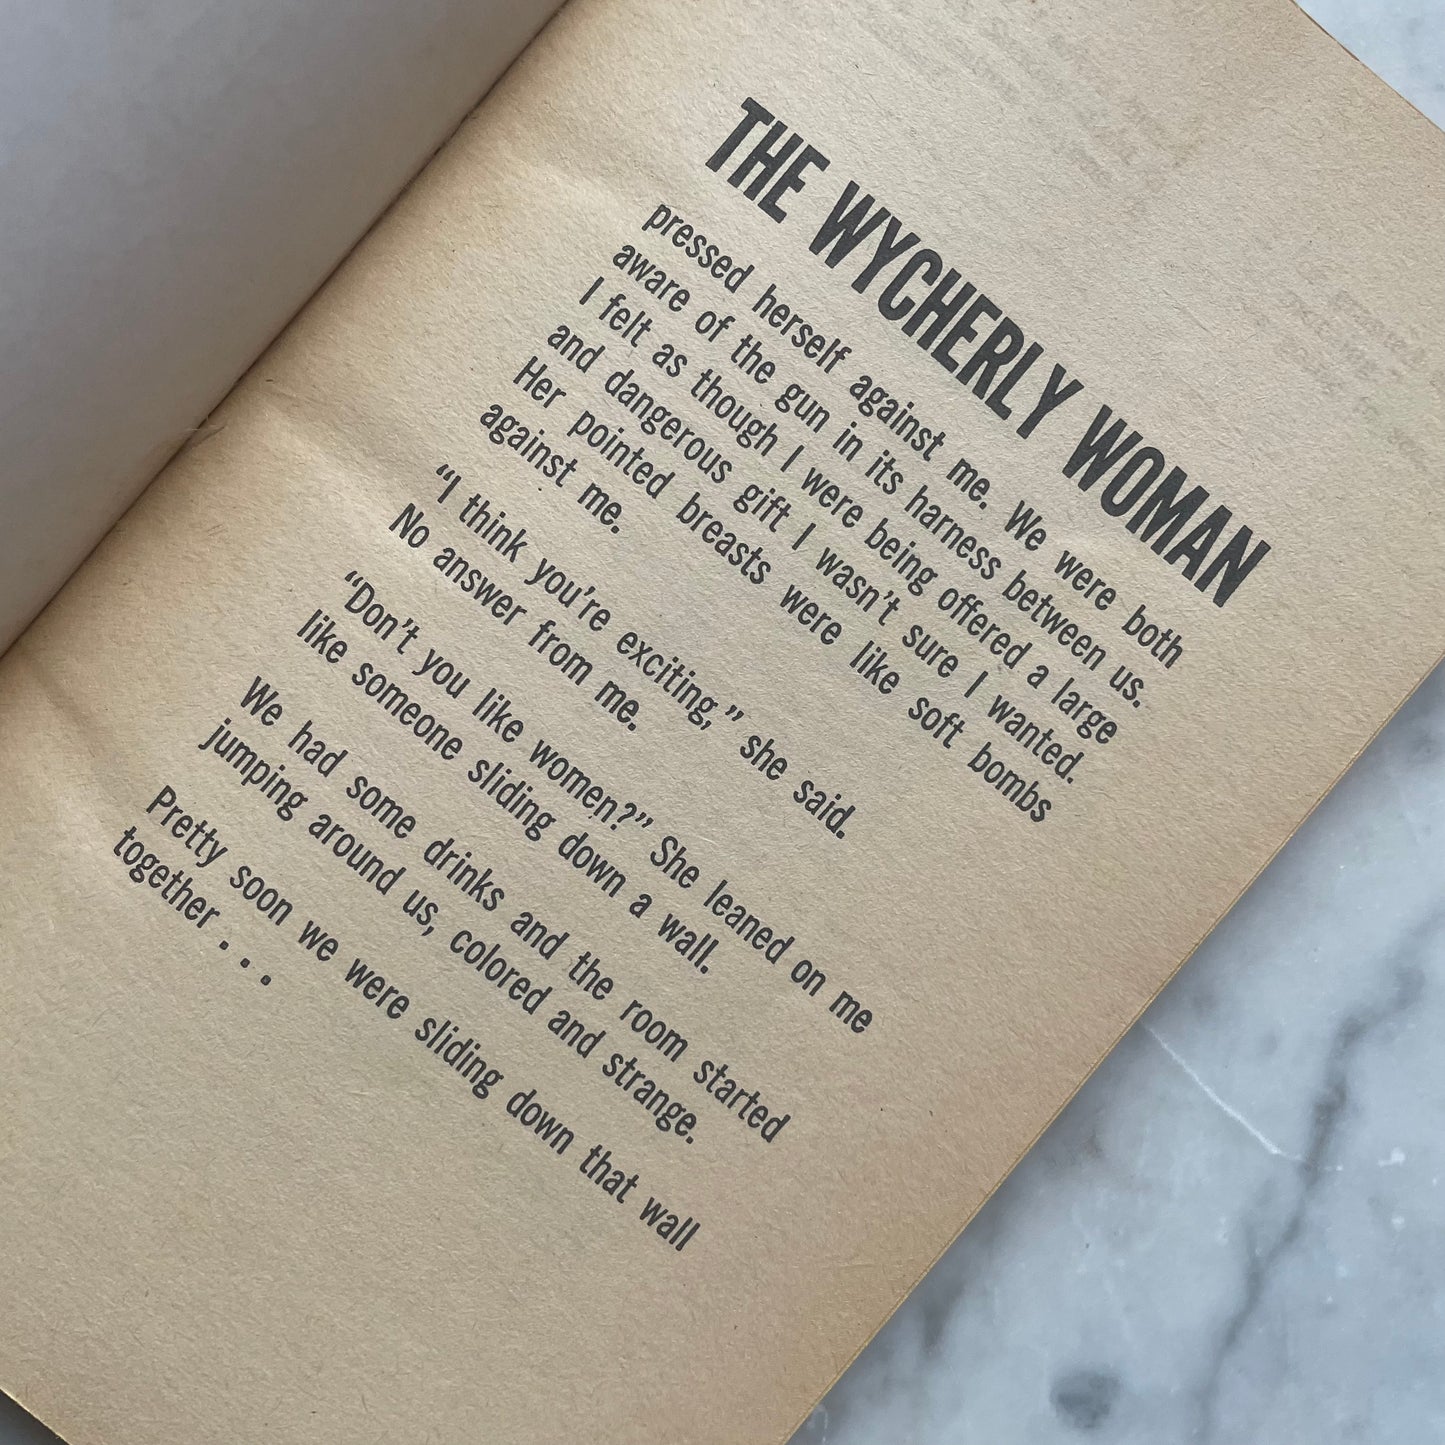 The Wycherly Woman | Ross Macdonald | 1963